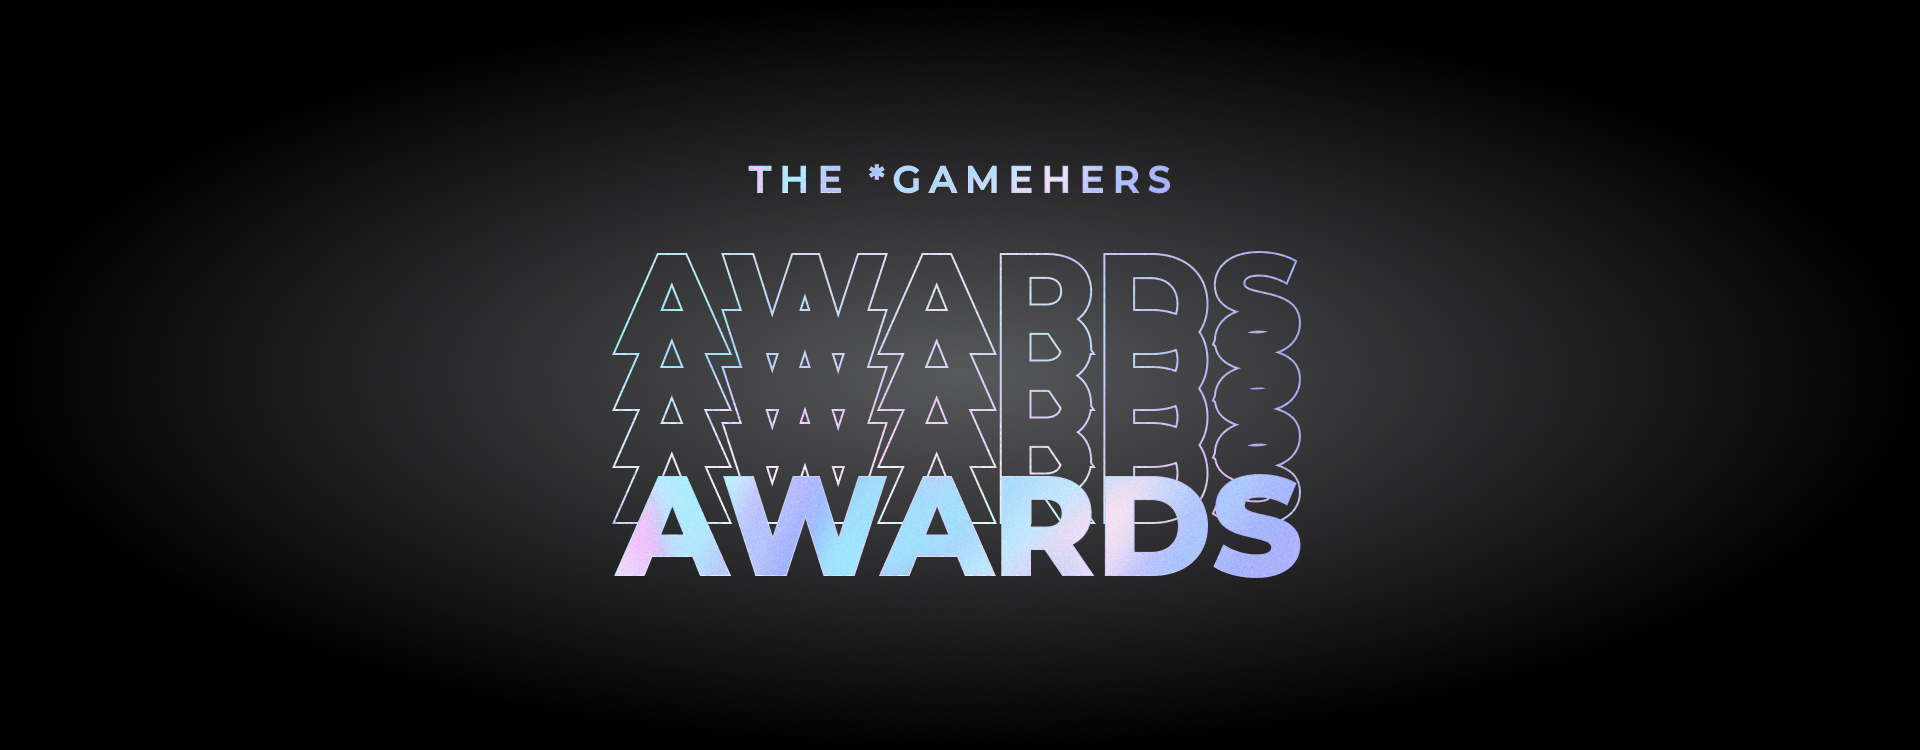 the*gamehers Awards 2024: Celebrating Fierce Women in Gaming